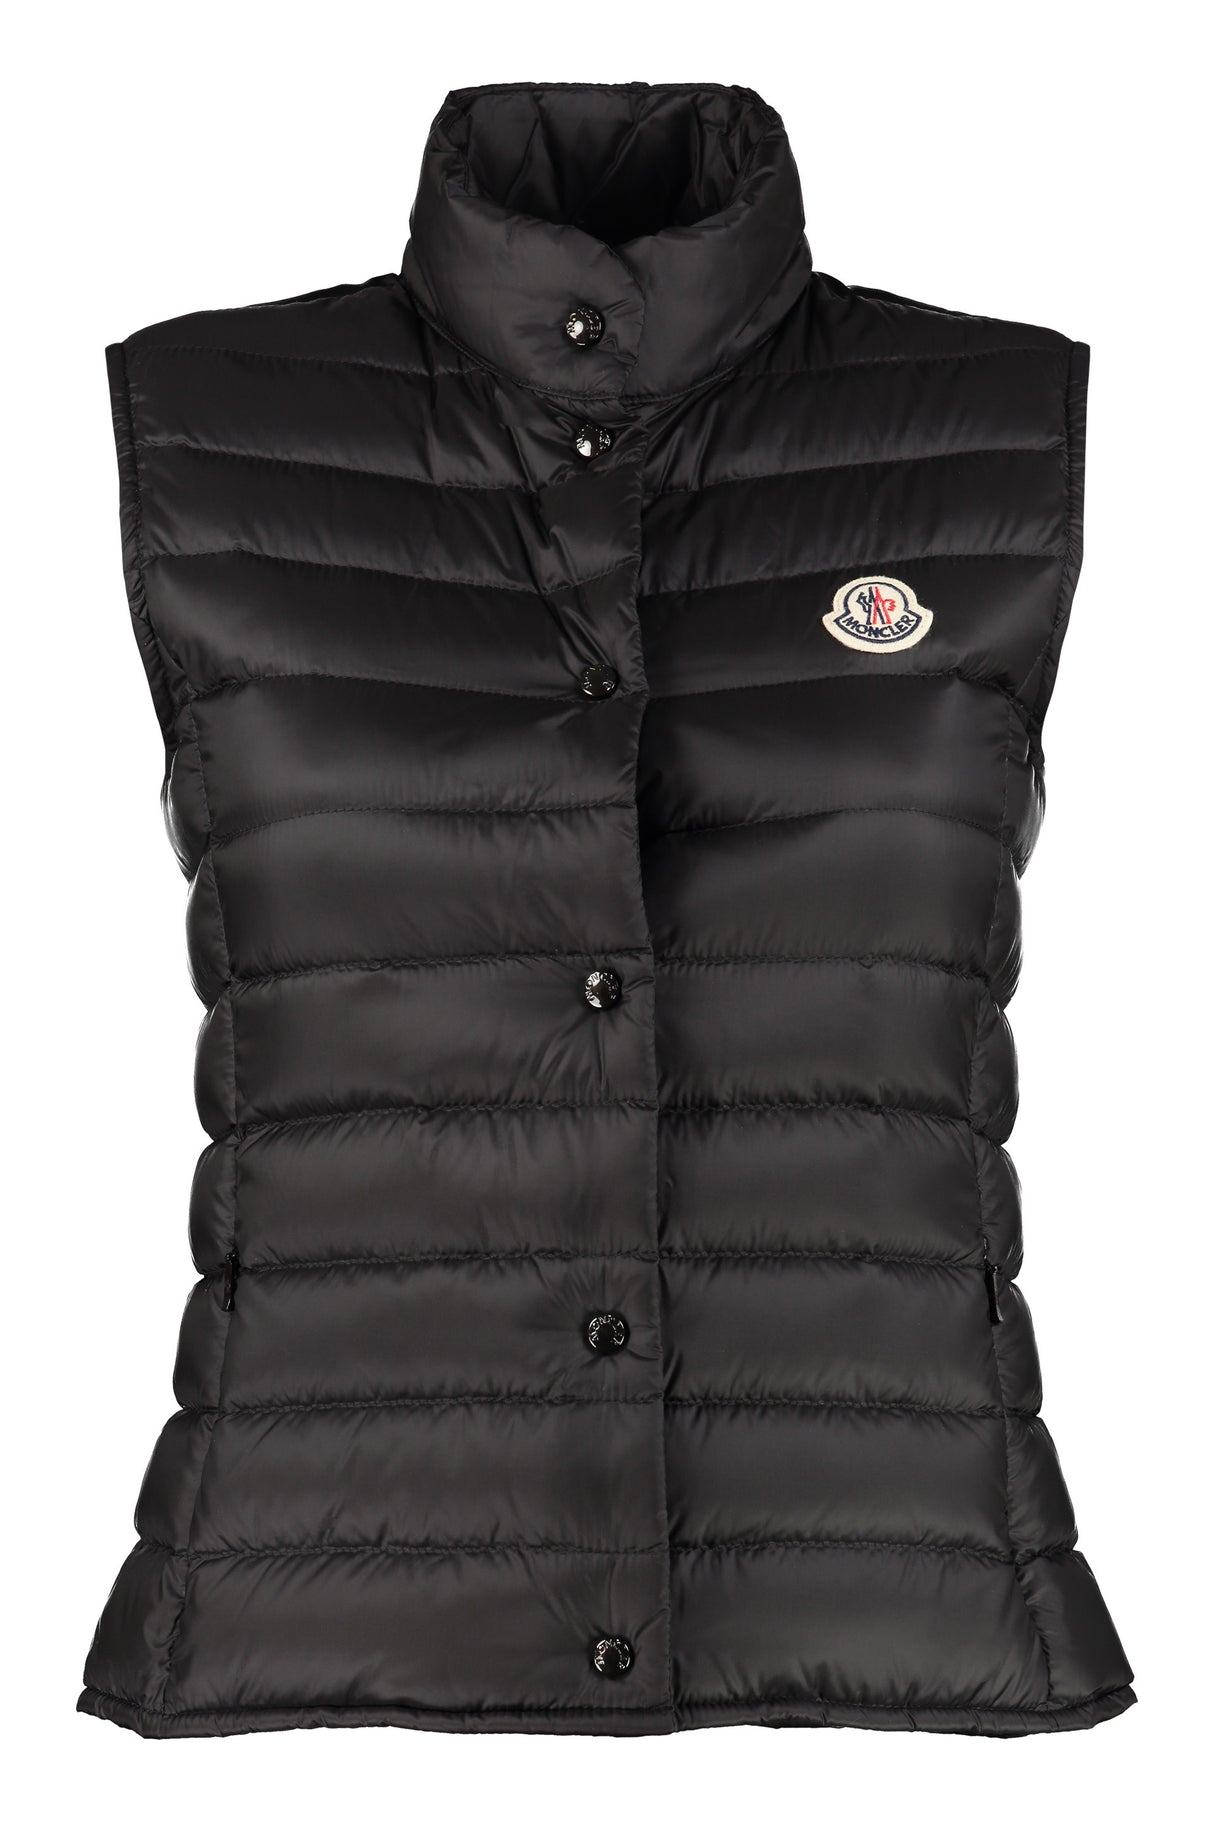 MONCLER Black Nylon Down Vest for Women - Slim Fit and Lightweight for Spring/Summer